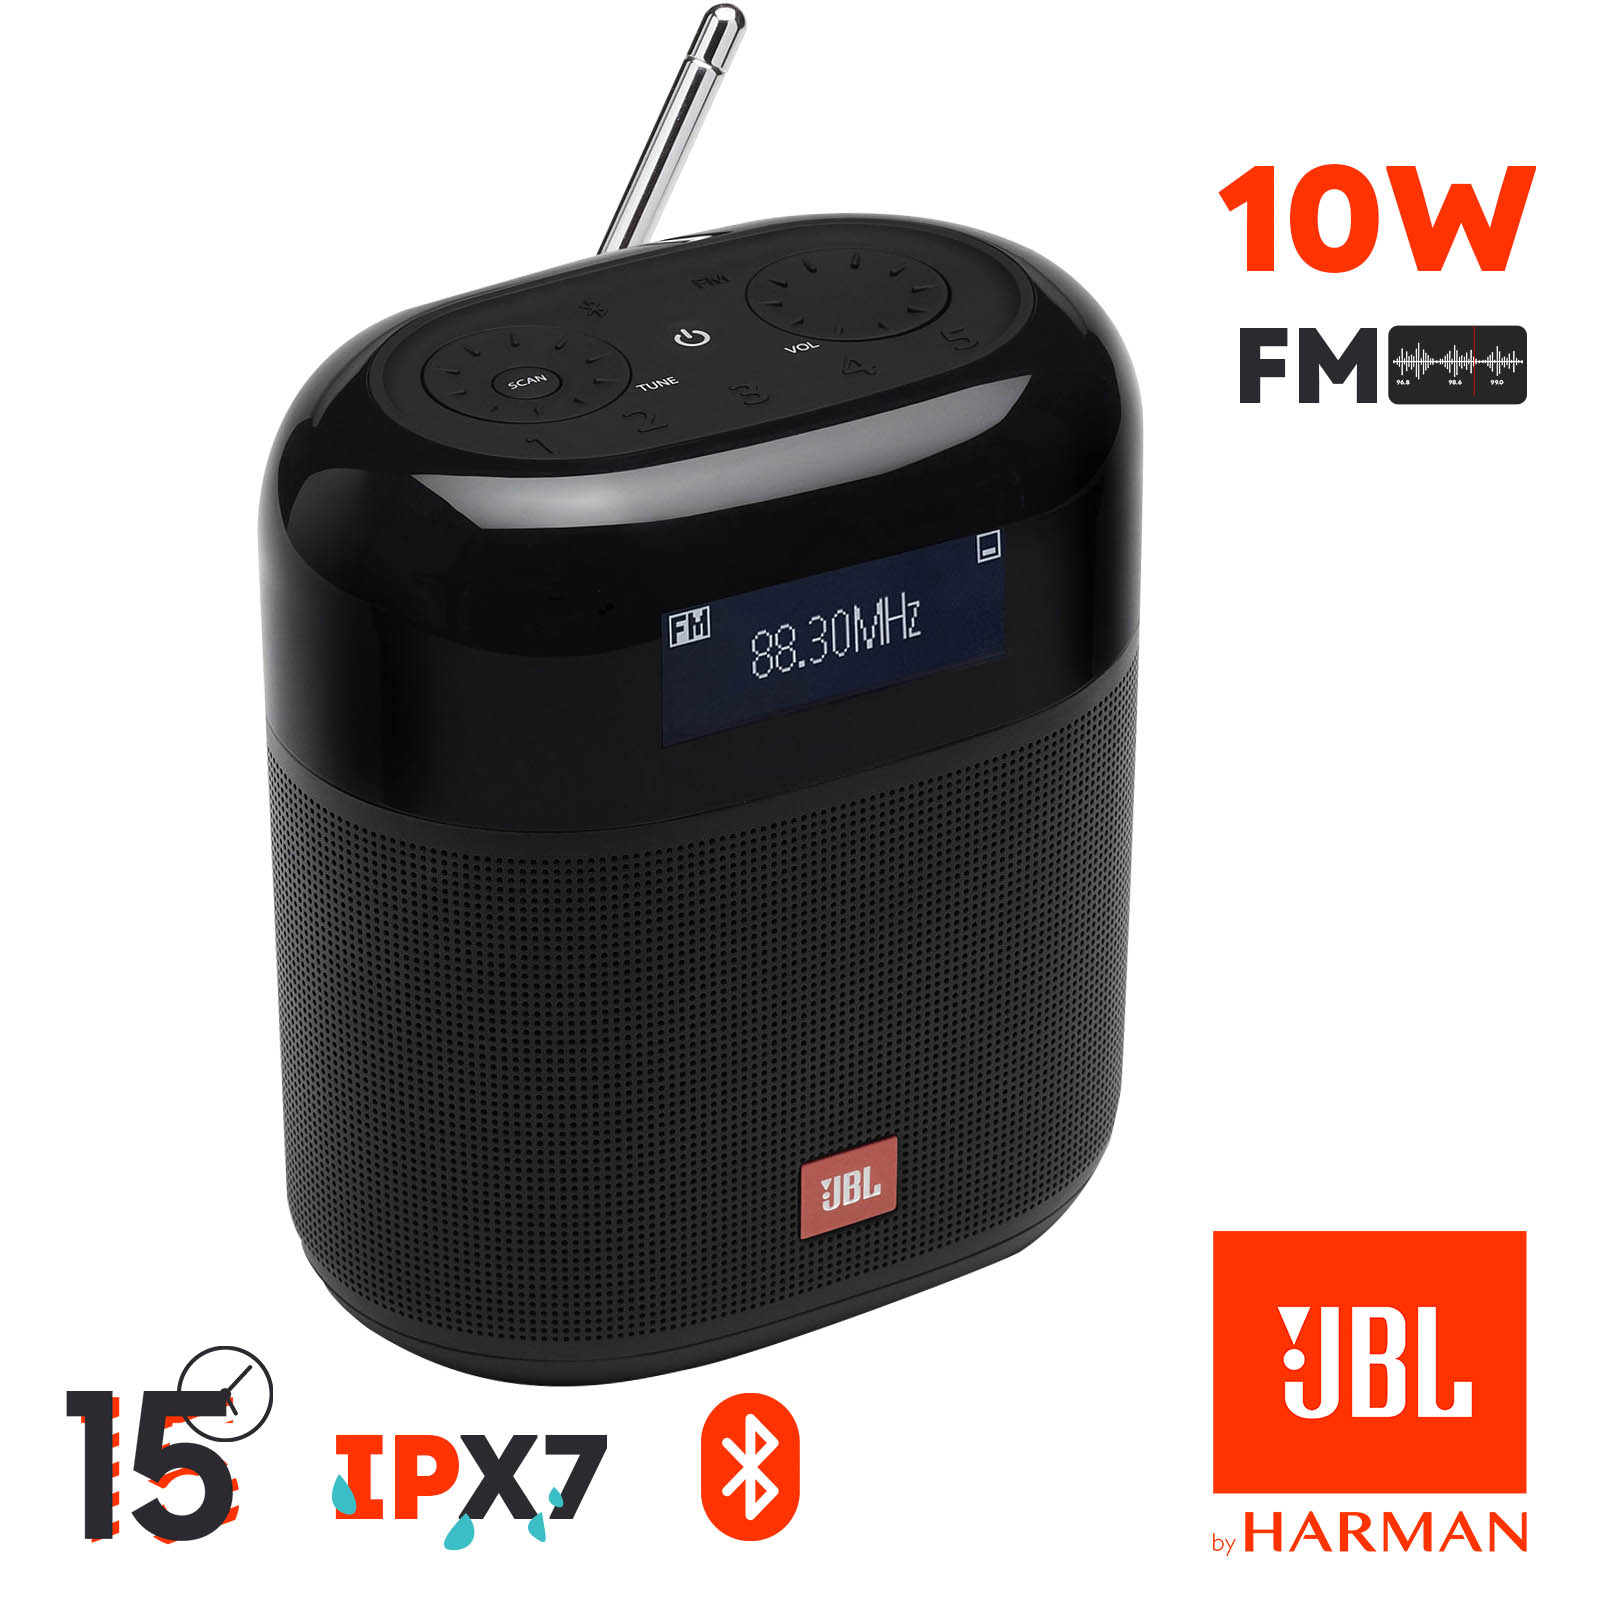 Enceinte Radio JBL Bluetooth 4.2 Son Cristallin Étanche IPX7